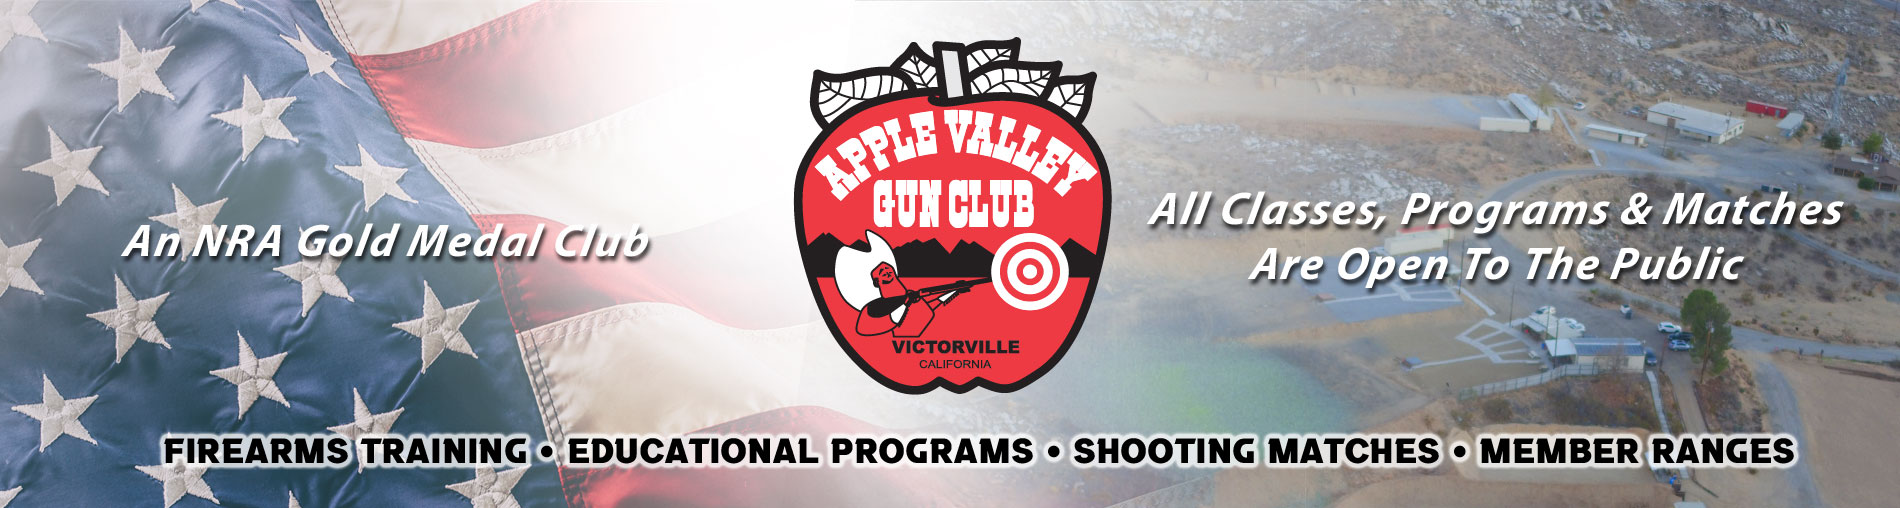 Apple Valley Gun Club An NRA Gold Medal Club